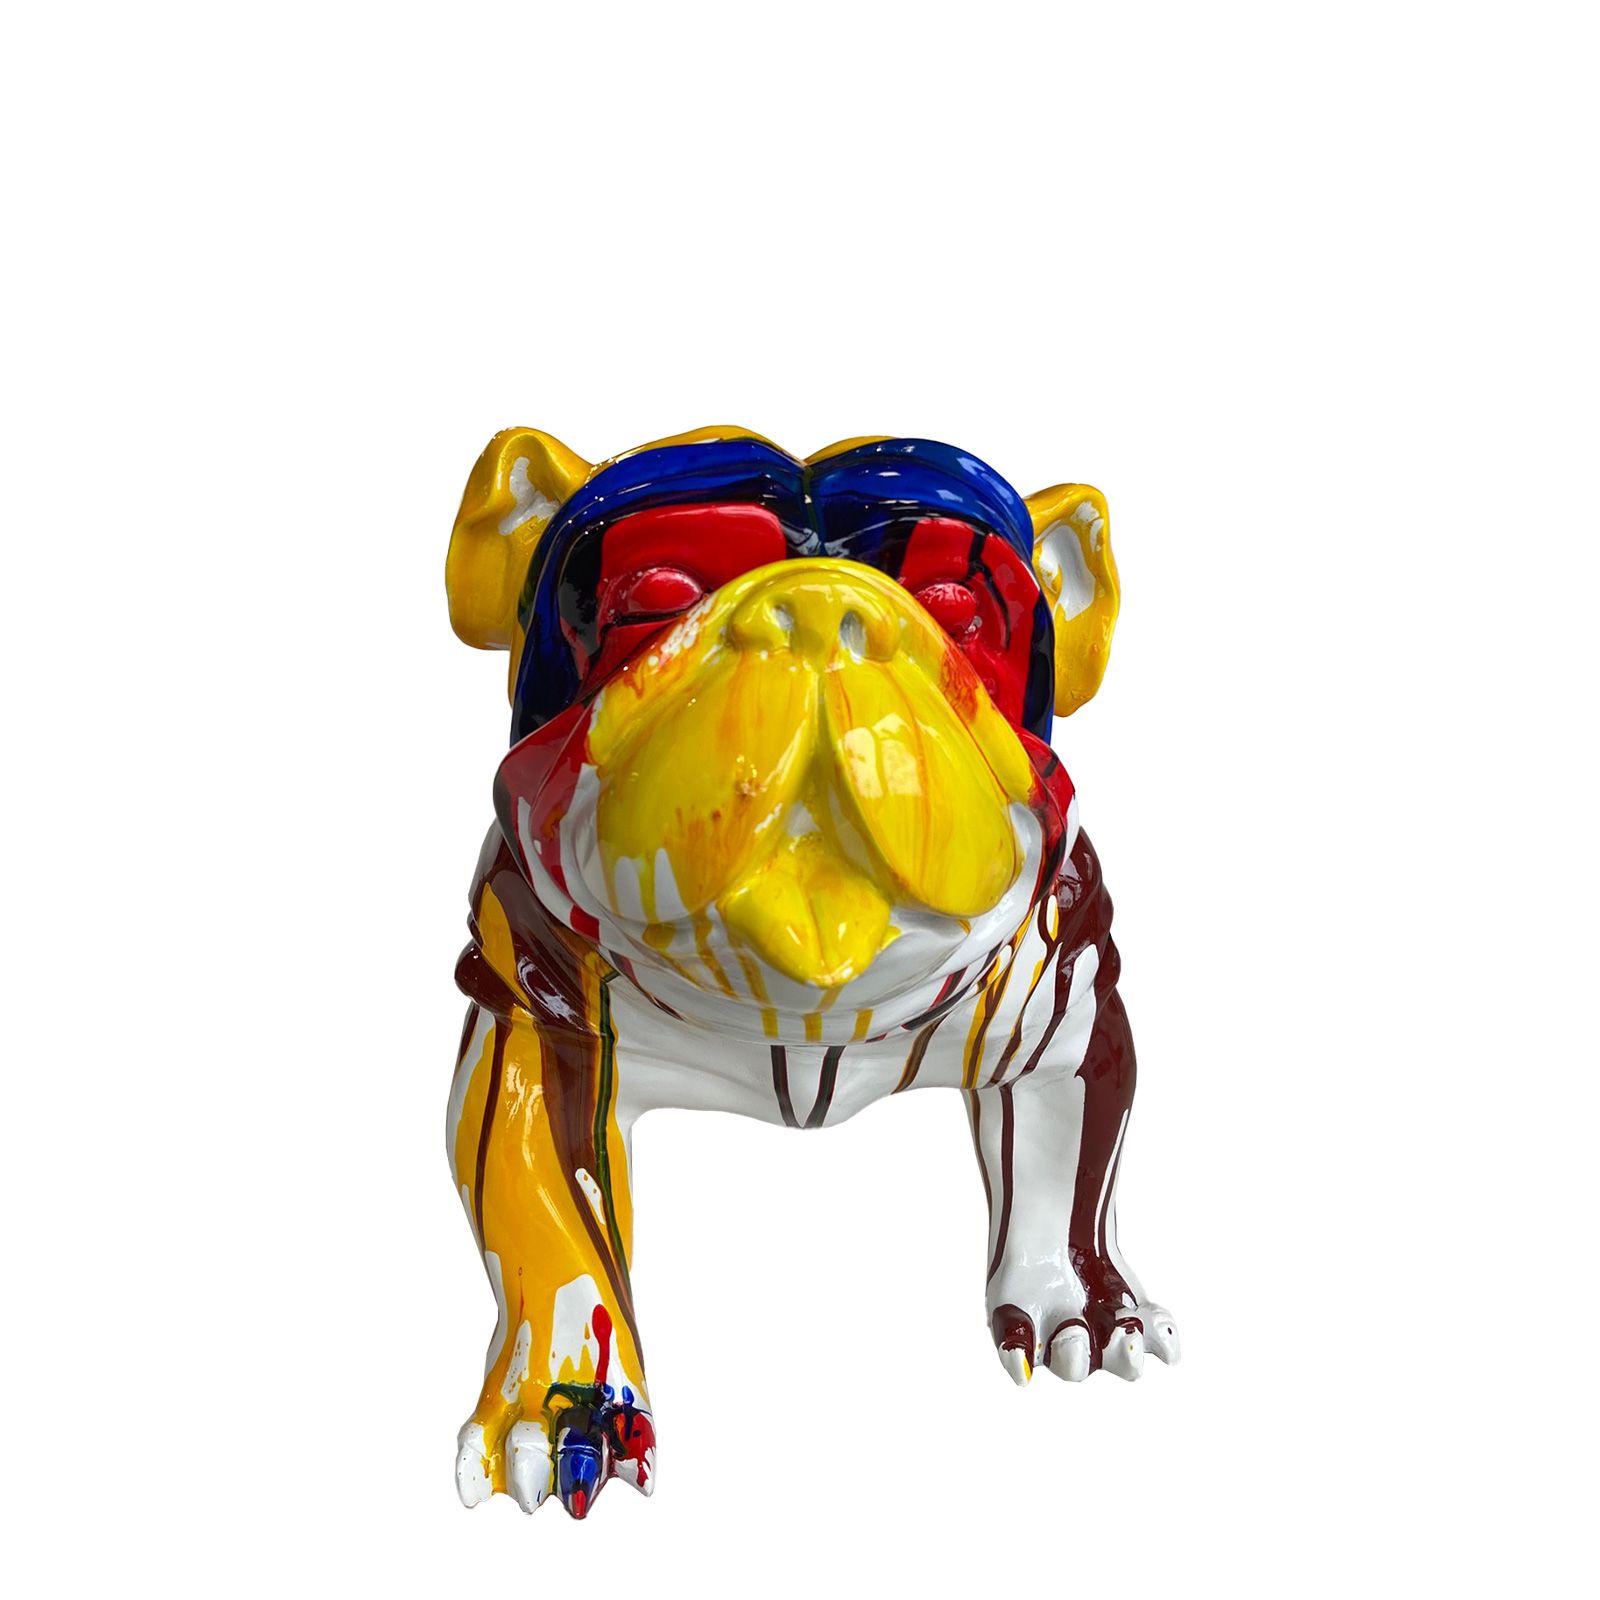 Serie ANIMALES M | GREGOR Bulldog multicolor 